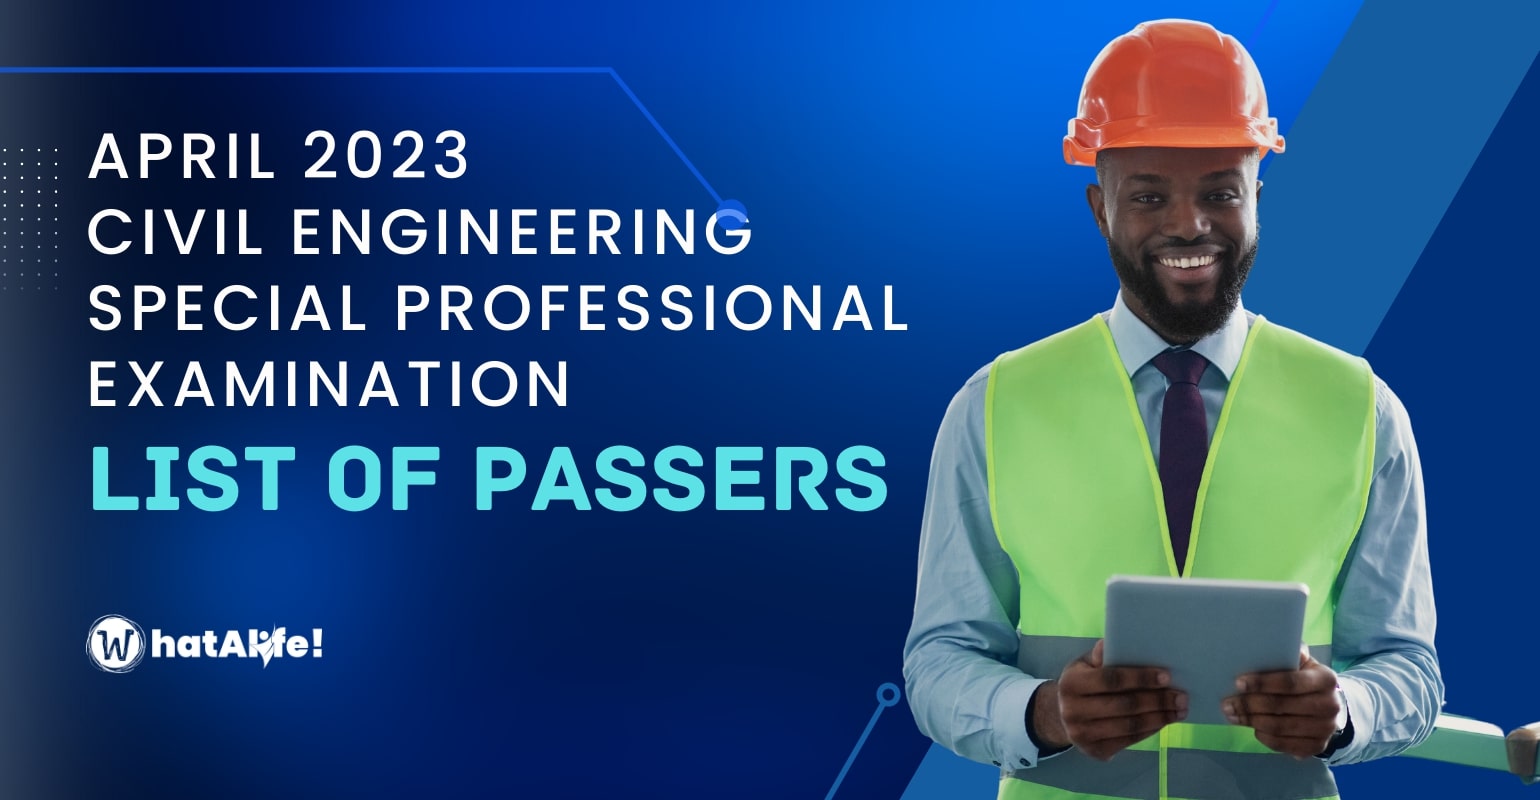 full list of passers april 2023 civil engineer special professional licensure exam